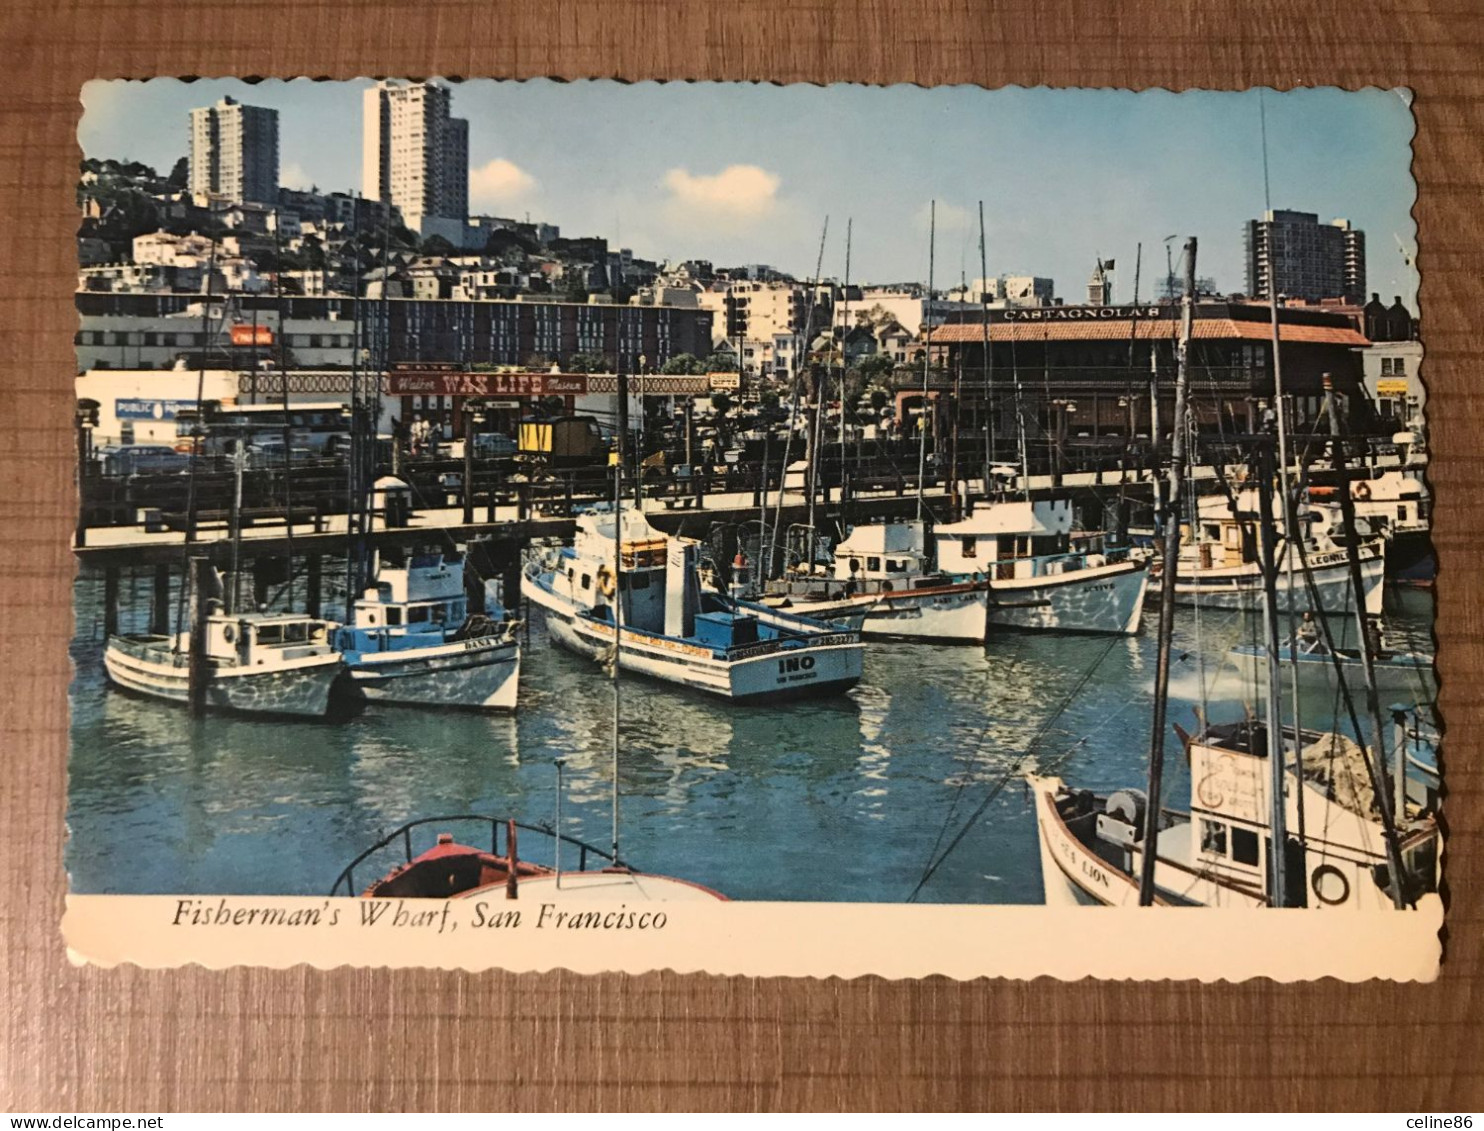  Fisherman's Wharf San Francisco  - San Francisco